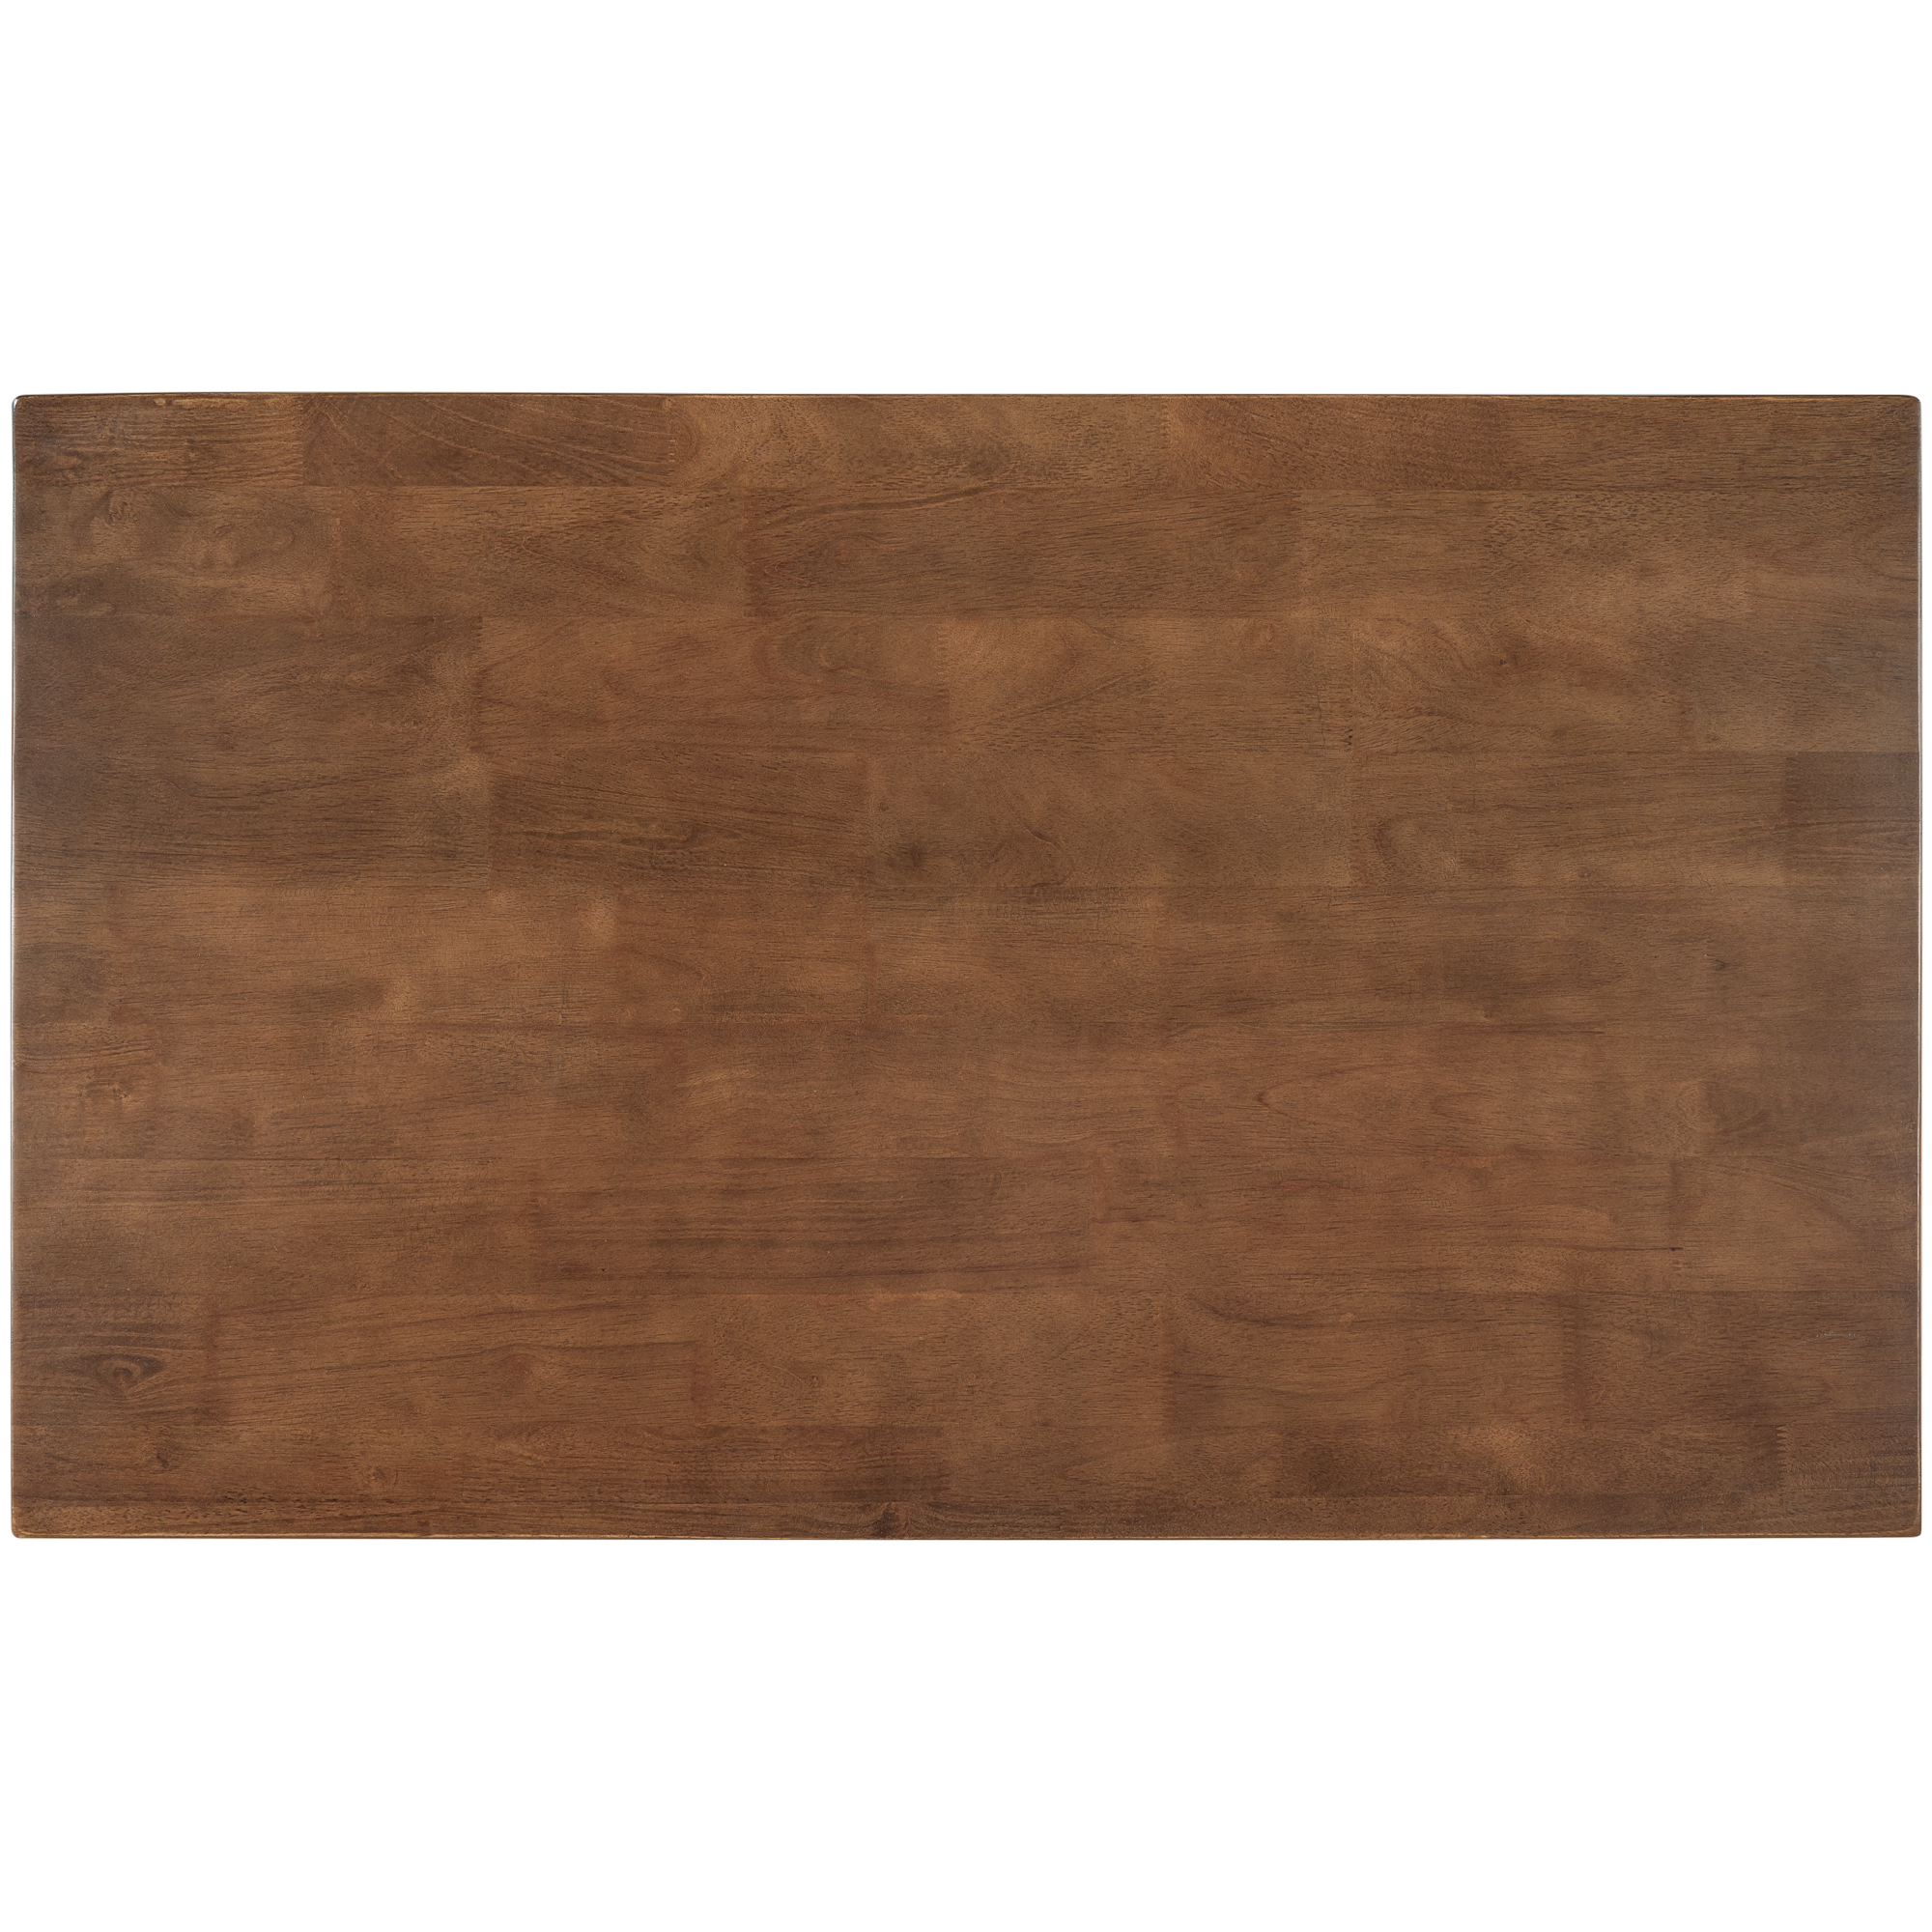 Solid Wood Rustic 3-Piece Rubber Wood Kitchen Island Set - SH000189AAD